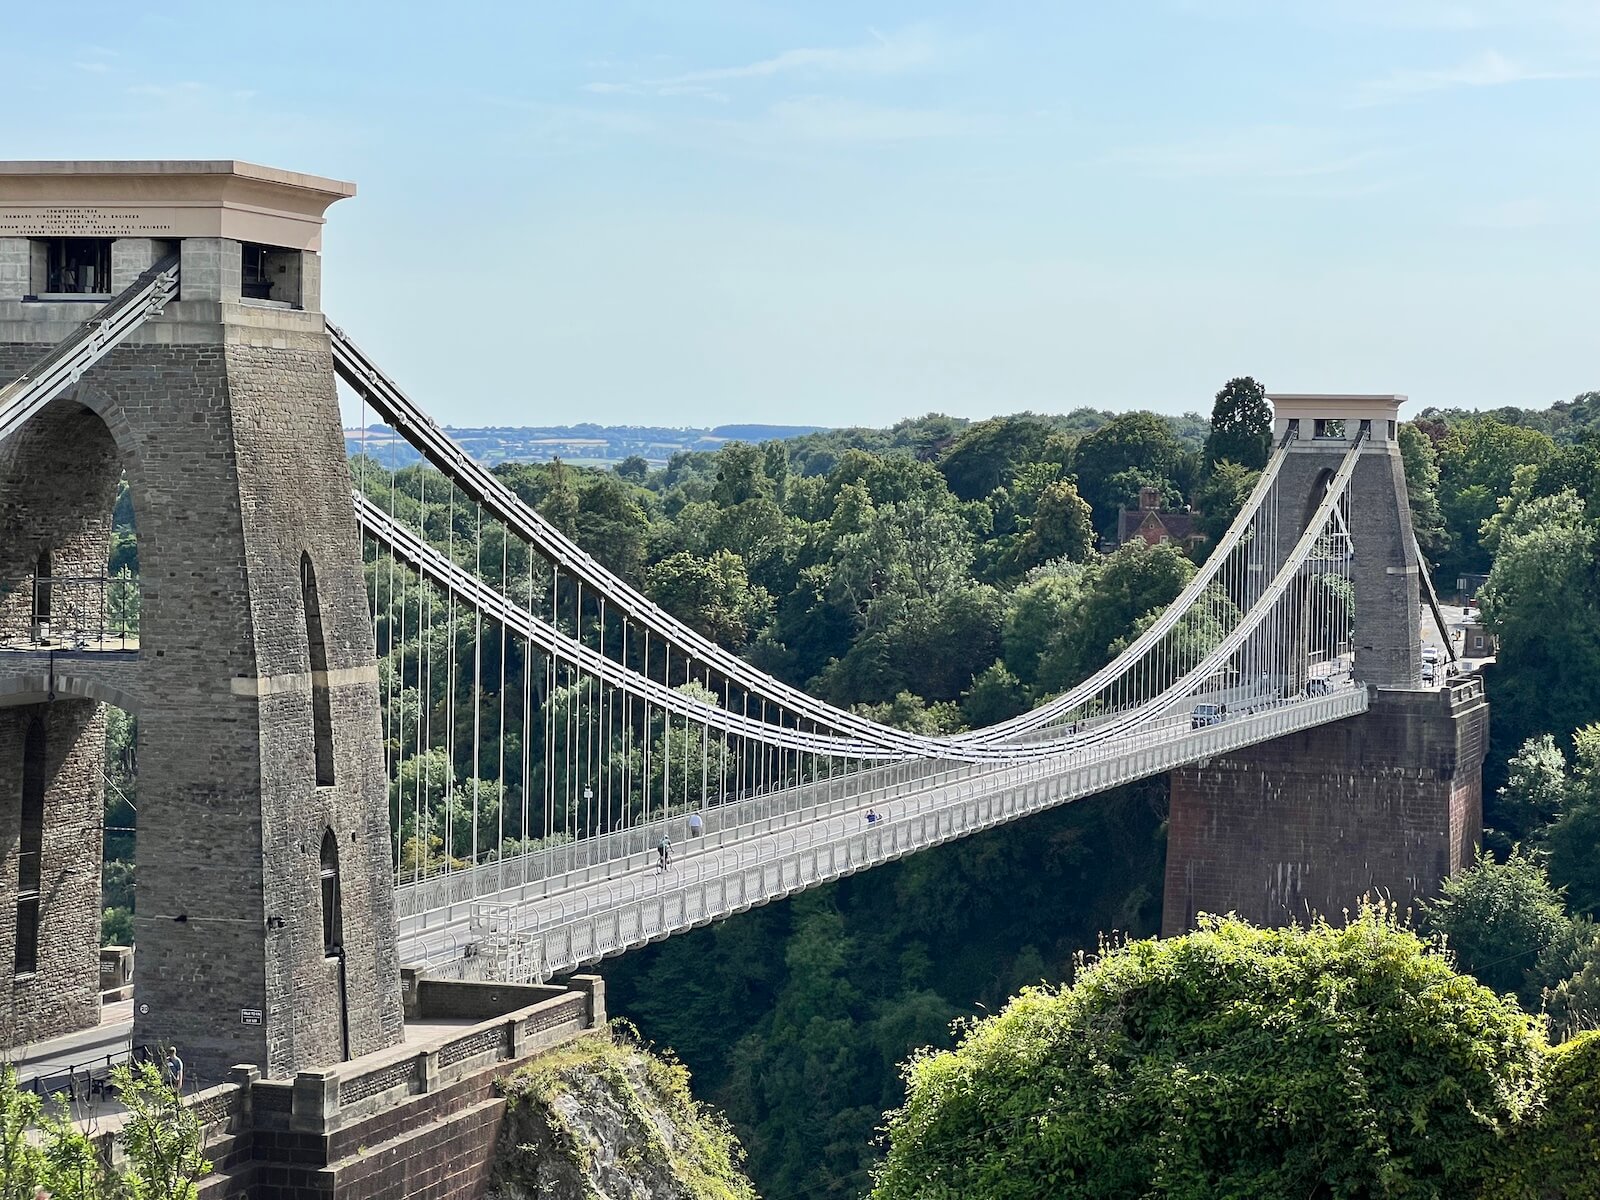 View of Brunel's Clifton Suspension Bridge in Bristol